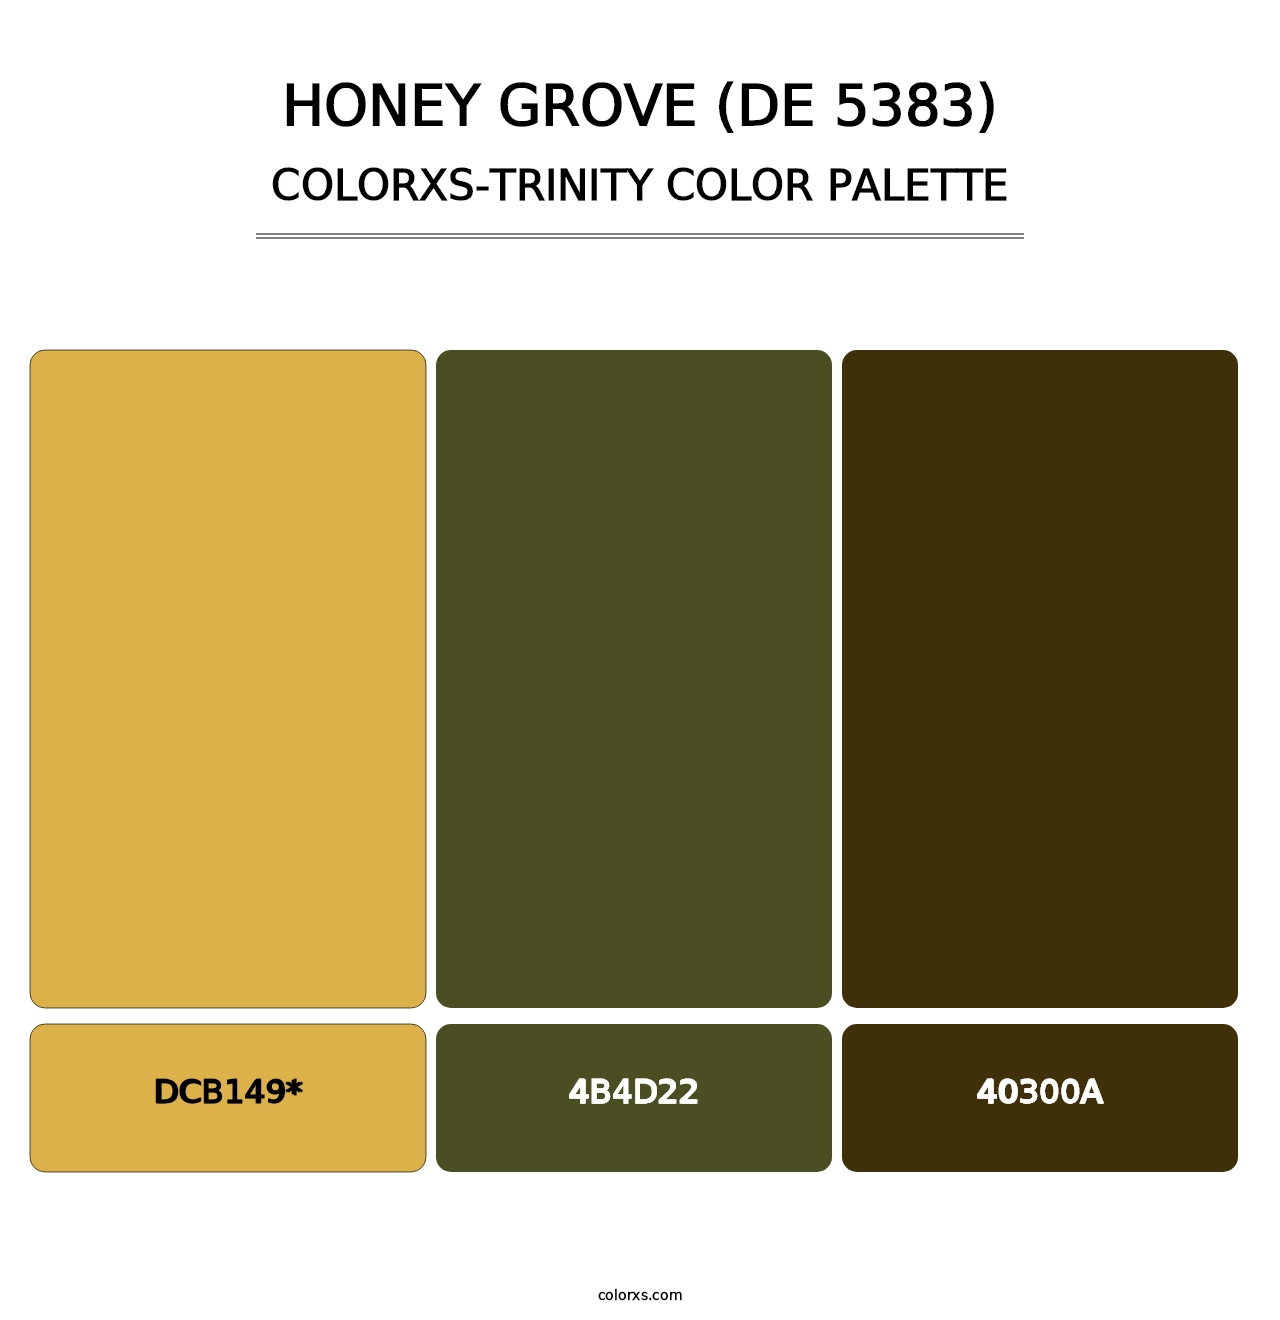 Honey Grove (DE 5383) - Colorxs Trinity Palette